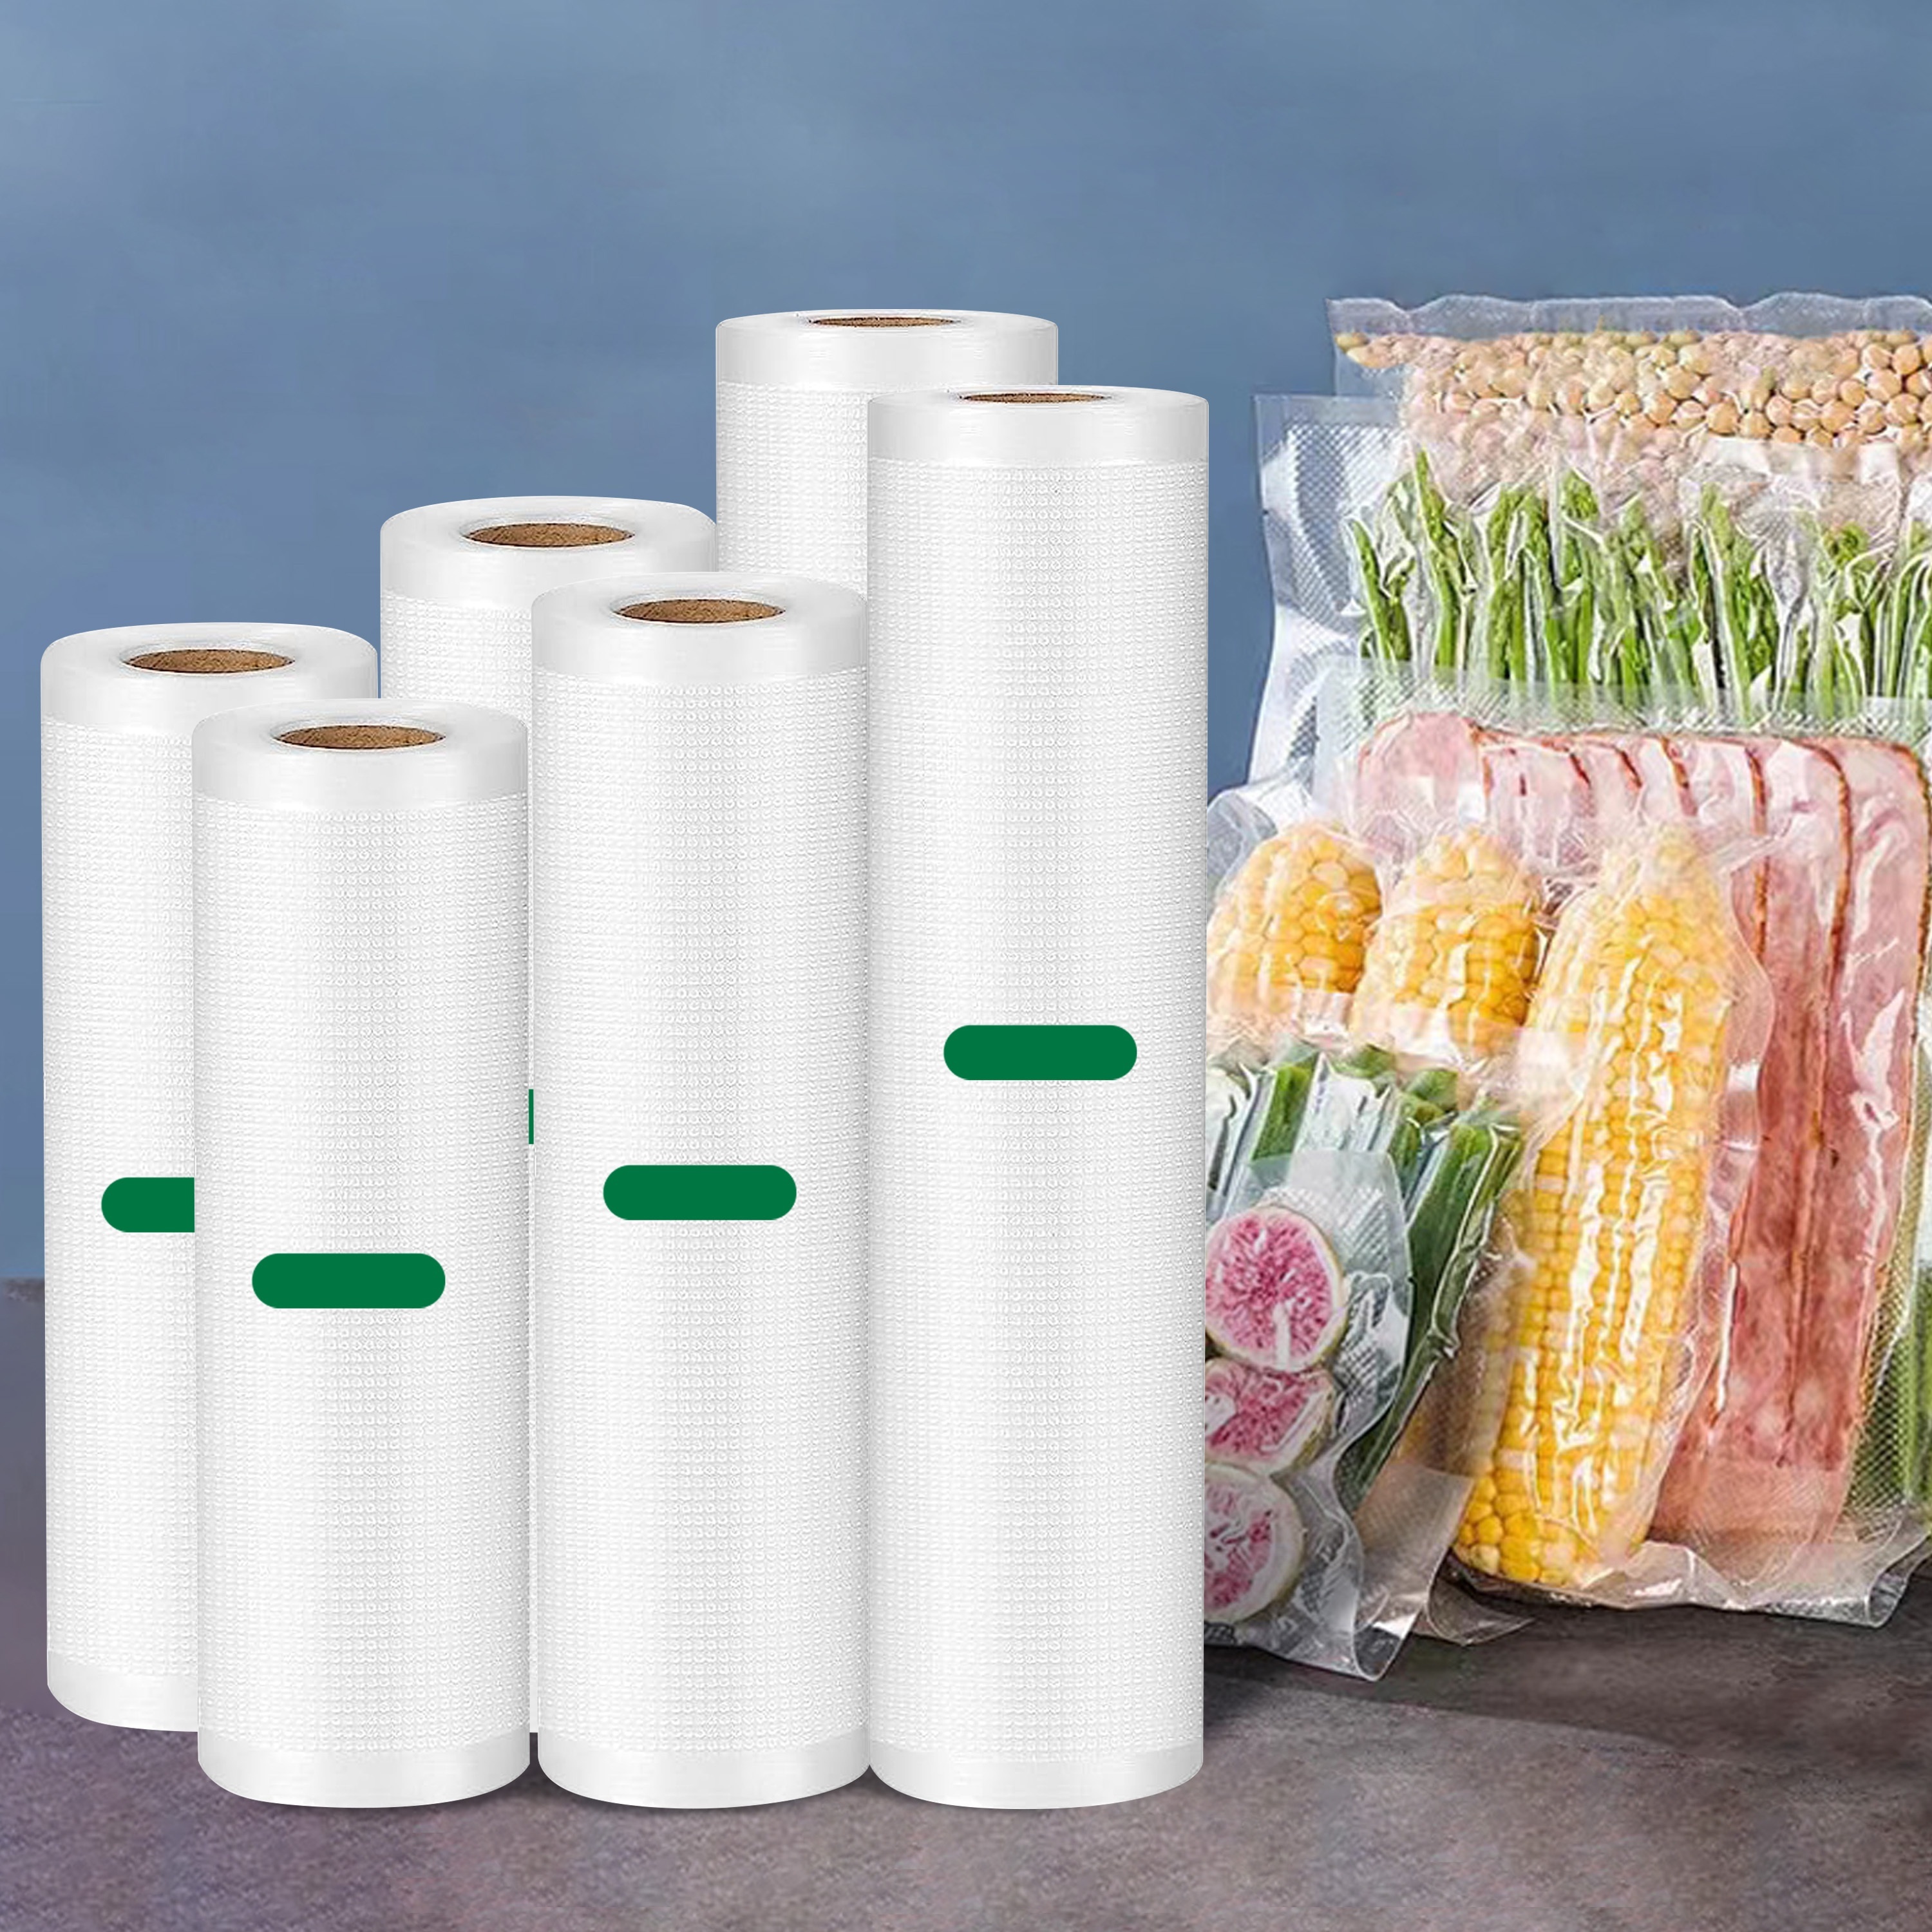 Vacuum Bags Or Rolls  Food Vacuum Sealers Australia